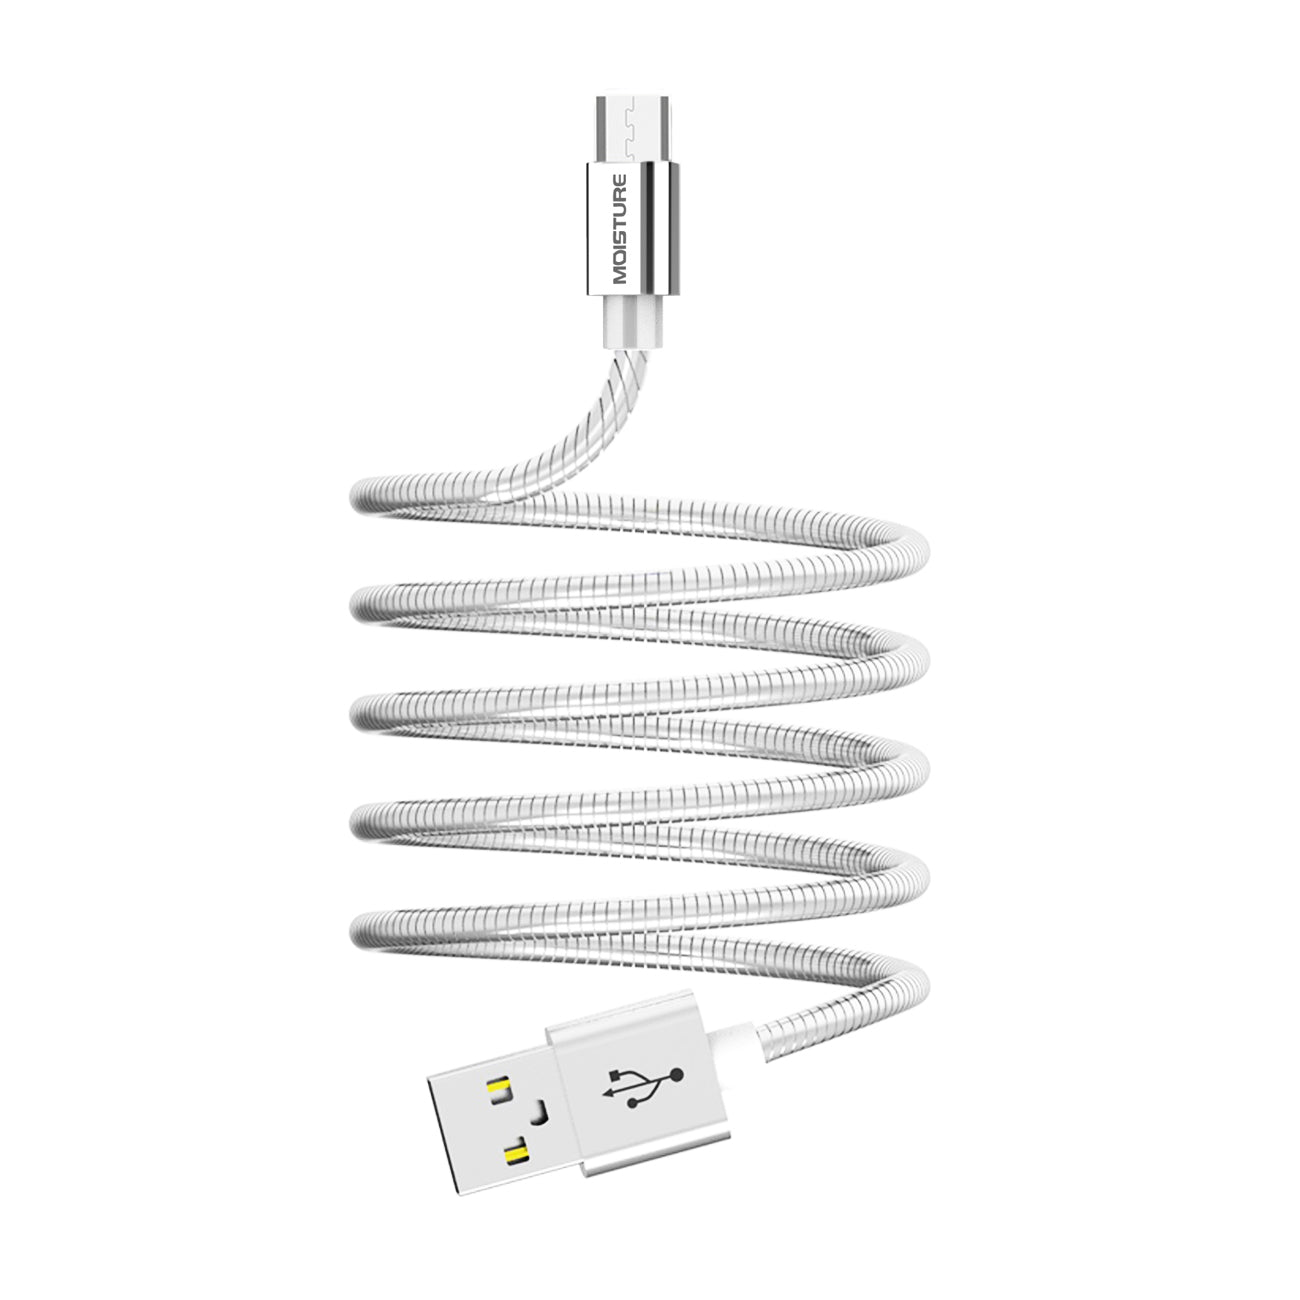 Data Cable Premium Full Hi-Speed Moisture 2.6A Silver Color